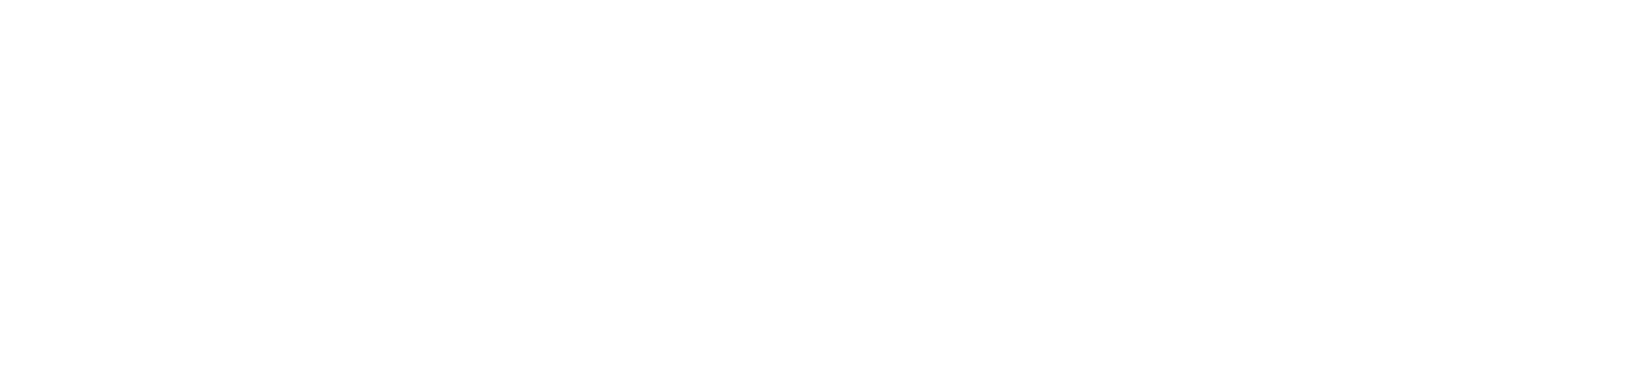 Illumina logo large for dark backgrounds (transparent PNG)